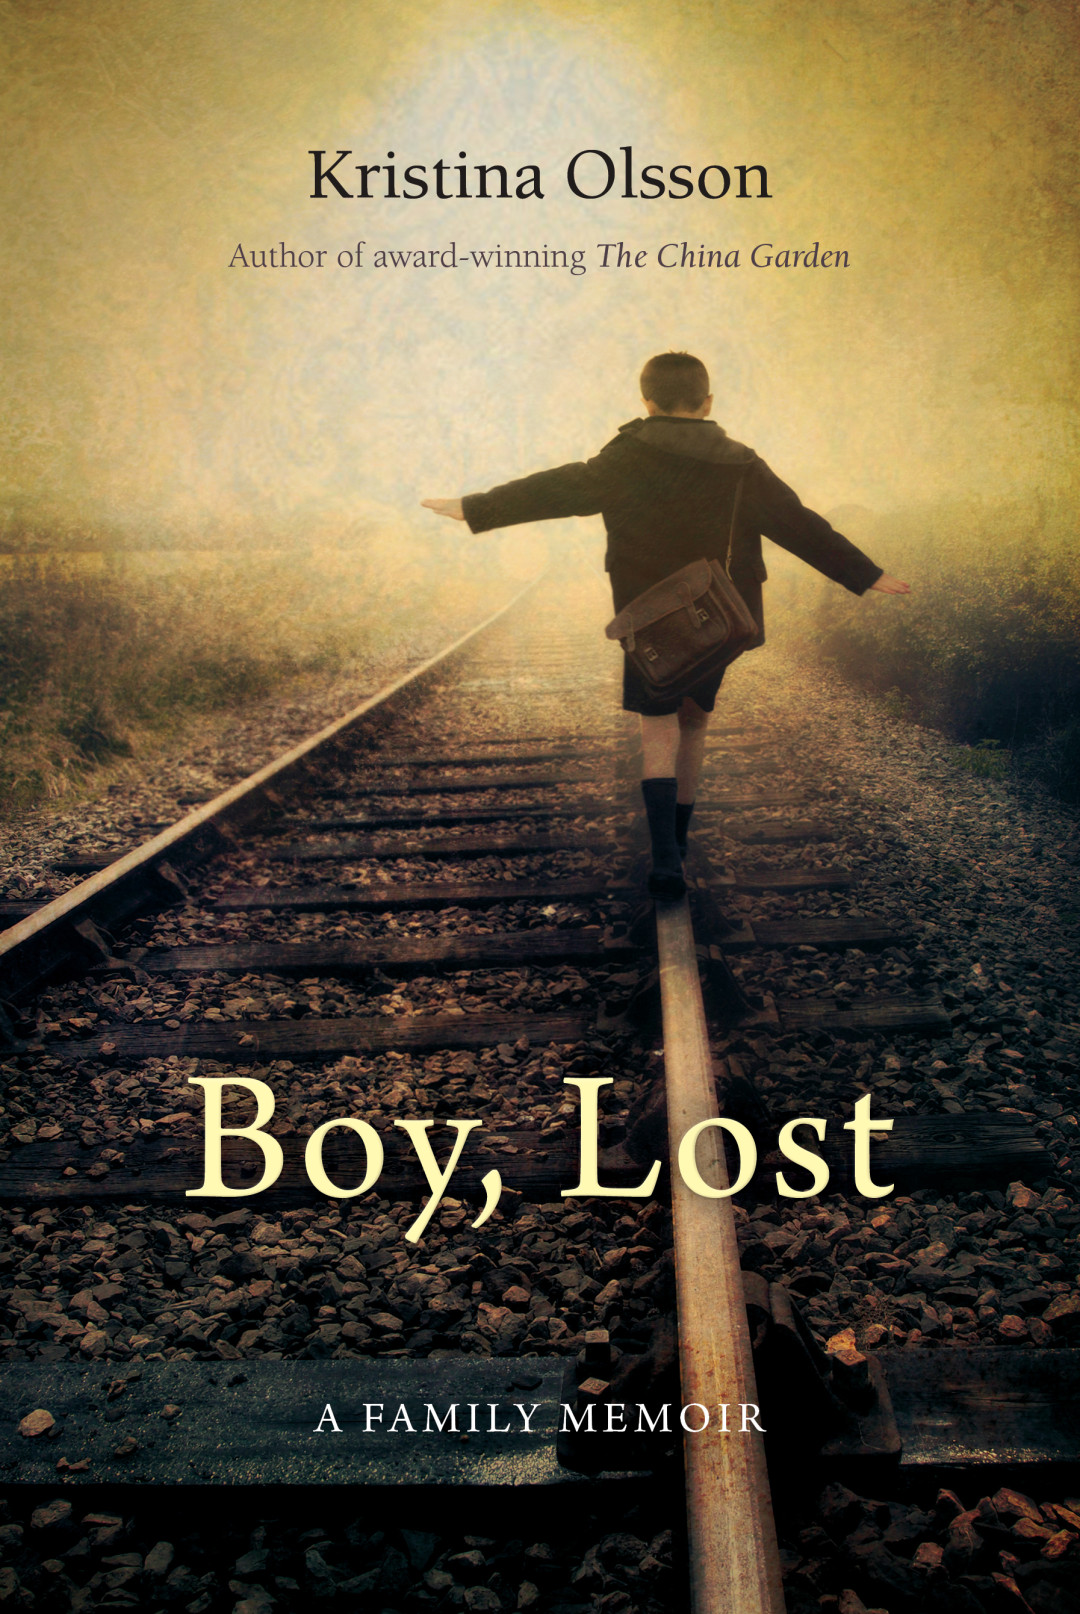 The Lost Boy (memoir) - Wikipedia, the free encyclopedia